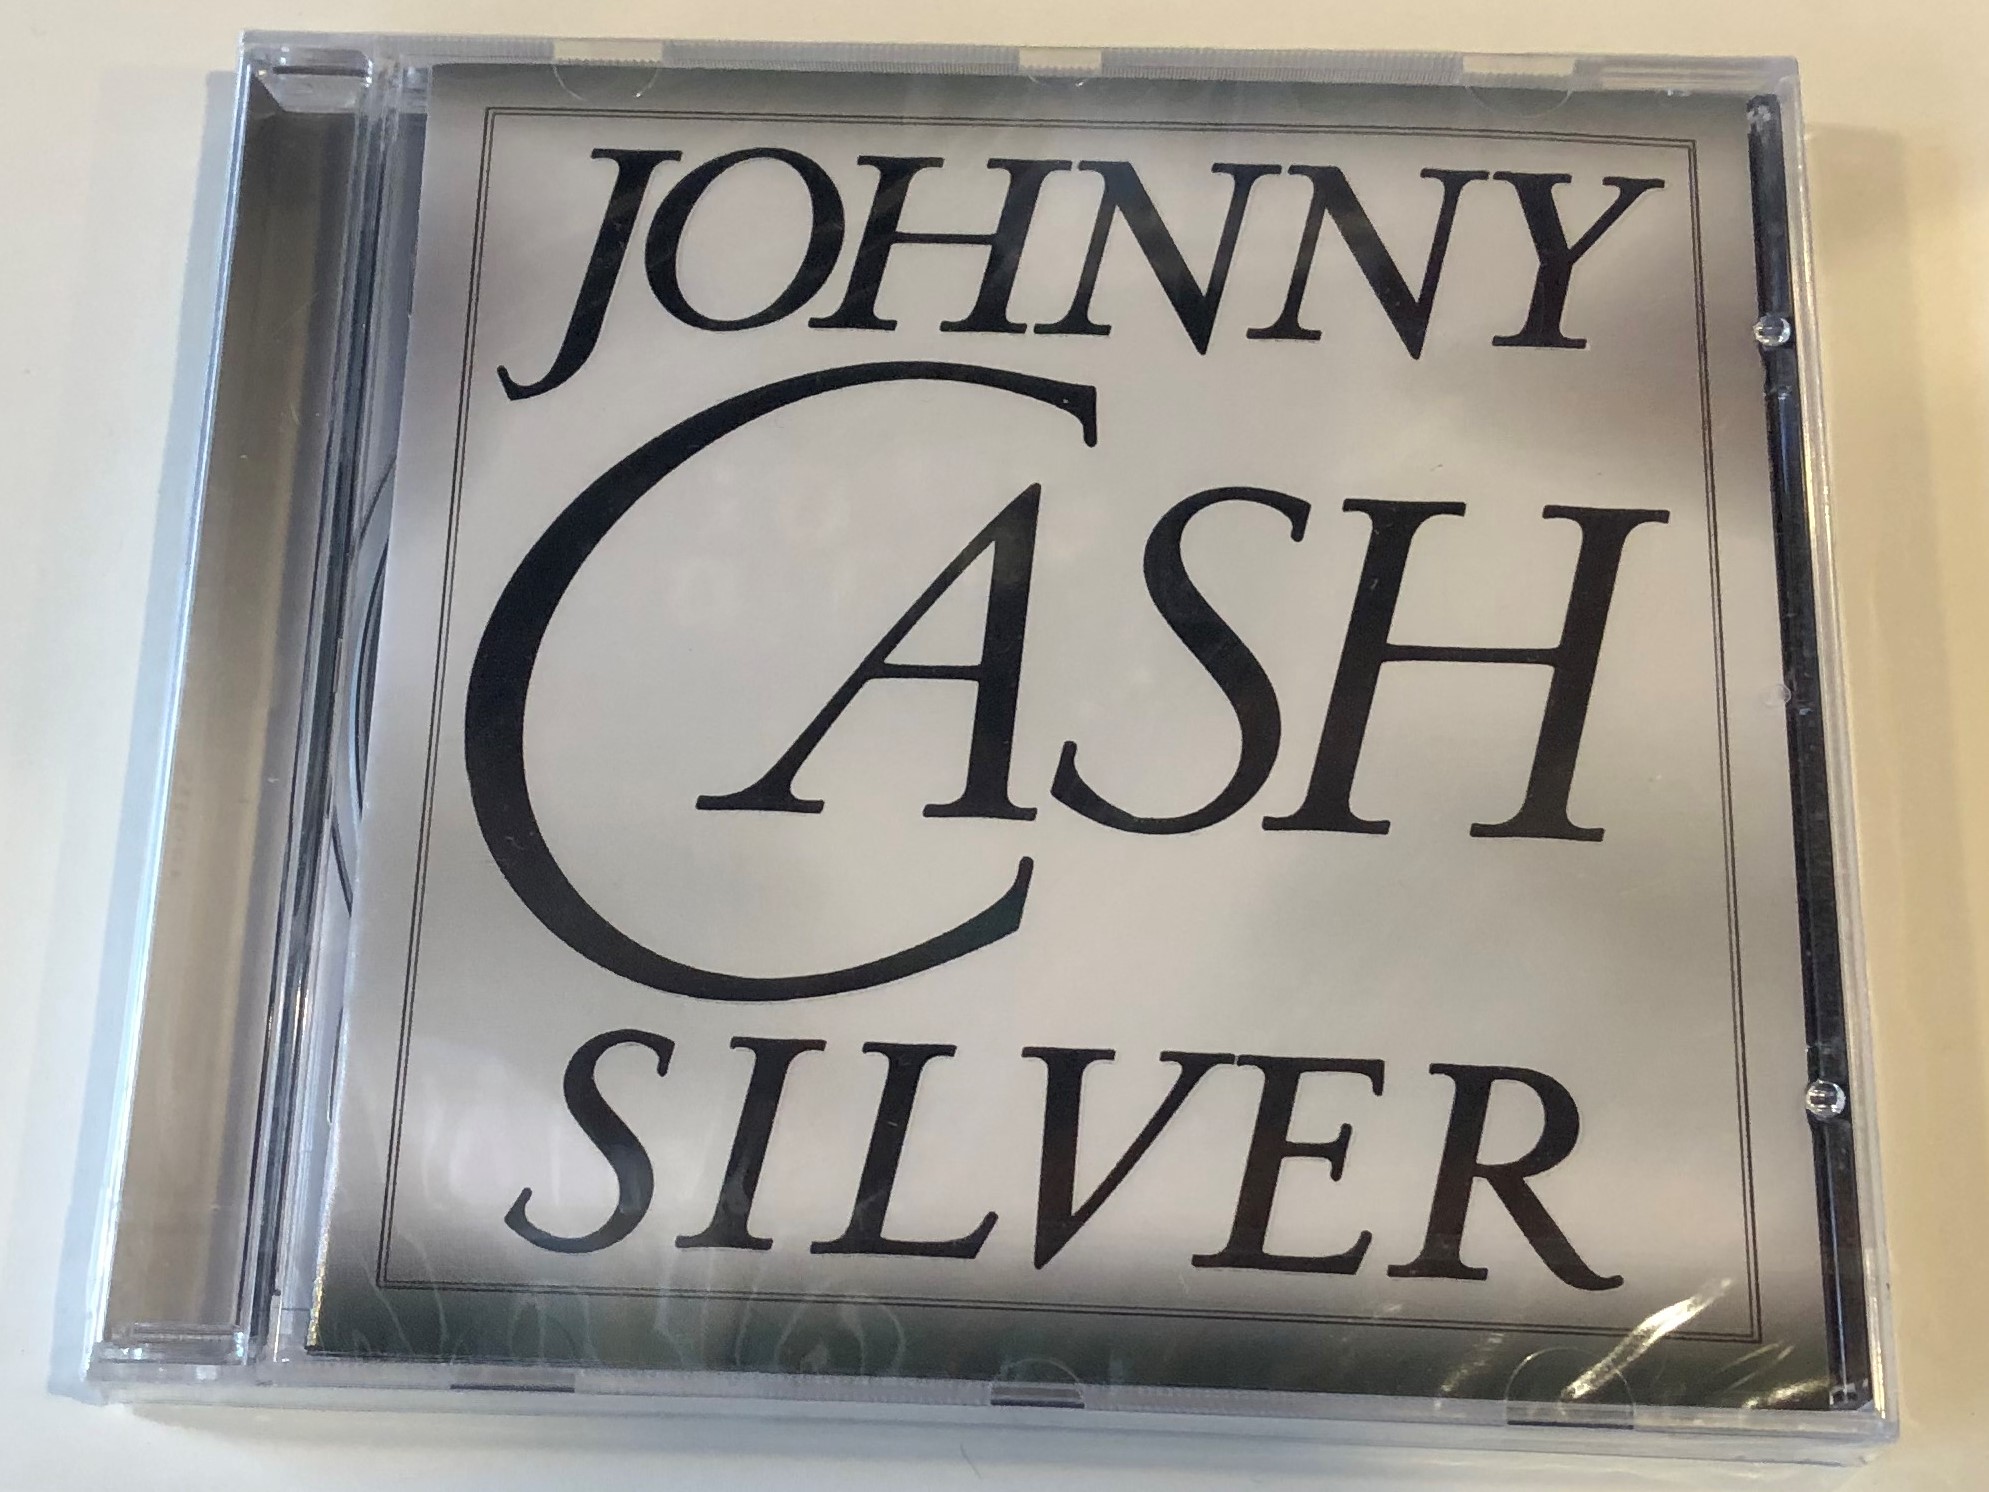 johnny-cash-silver-columbia-audio-cd-2002-col-509413-2-1-.jpg